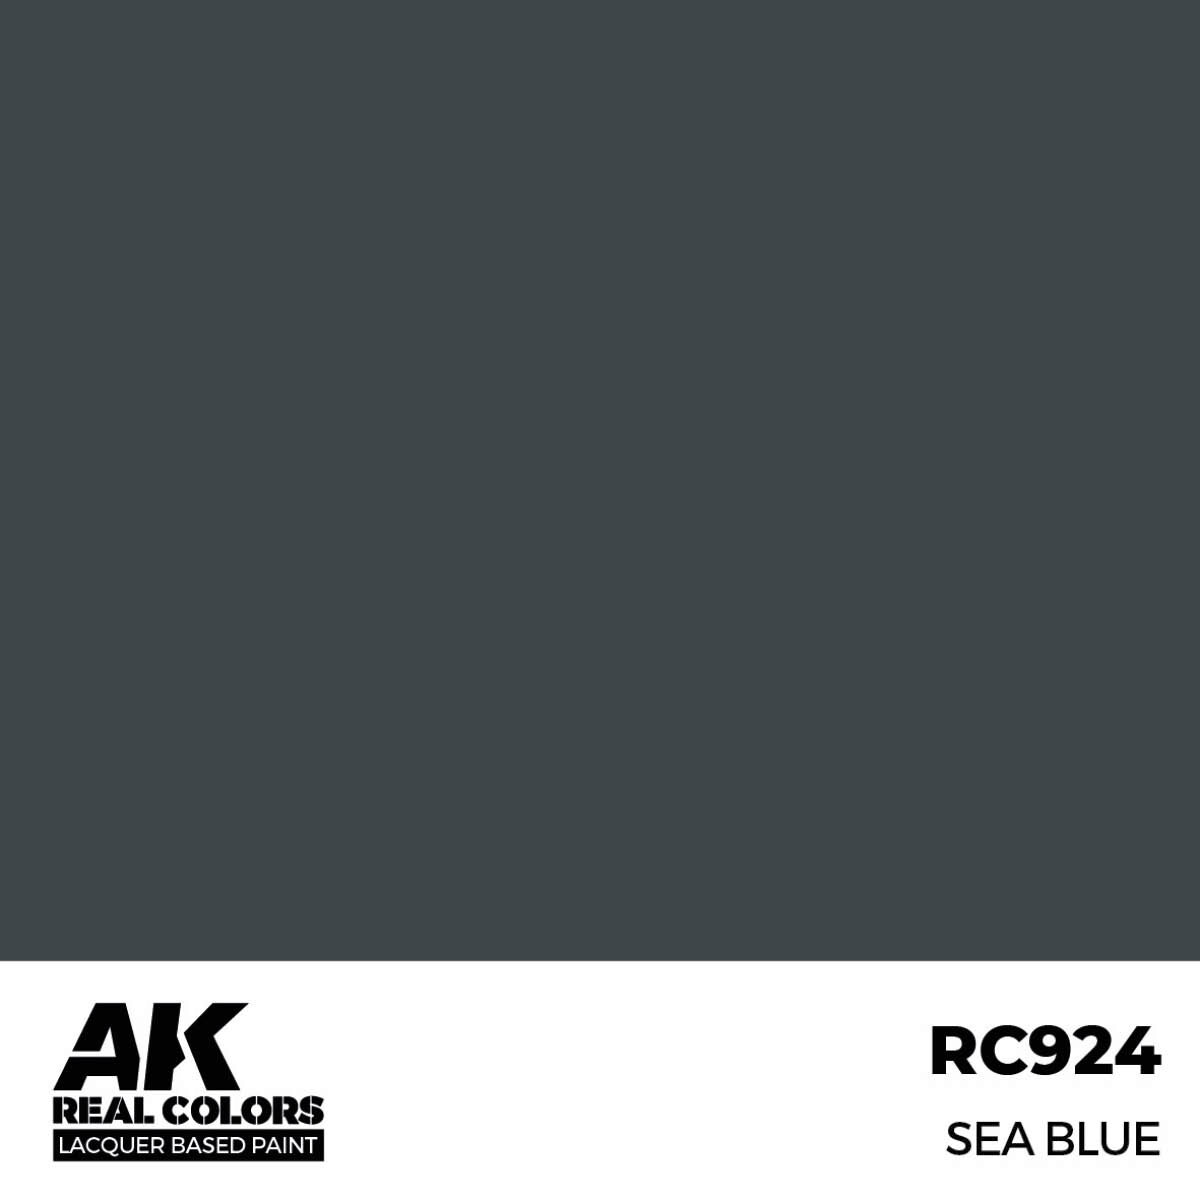 AK RC924 Real Colors Sea Blue 17 ml.